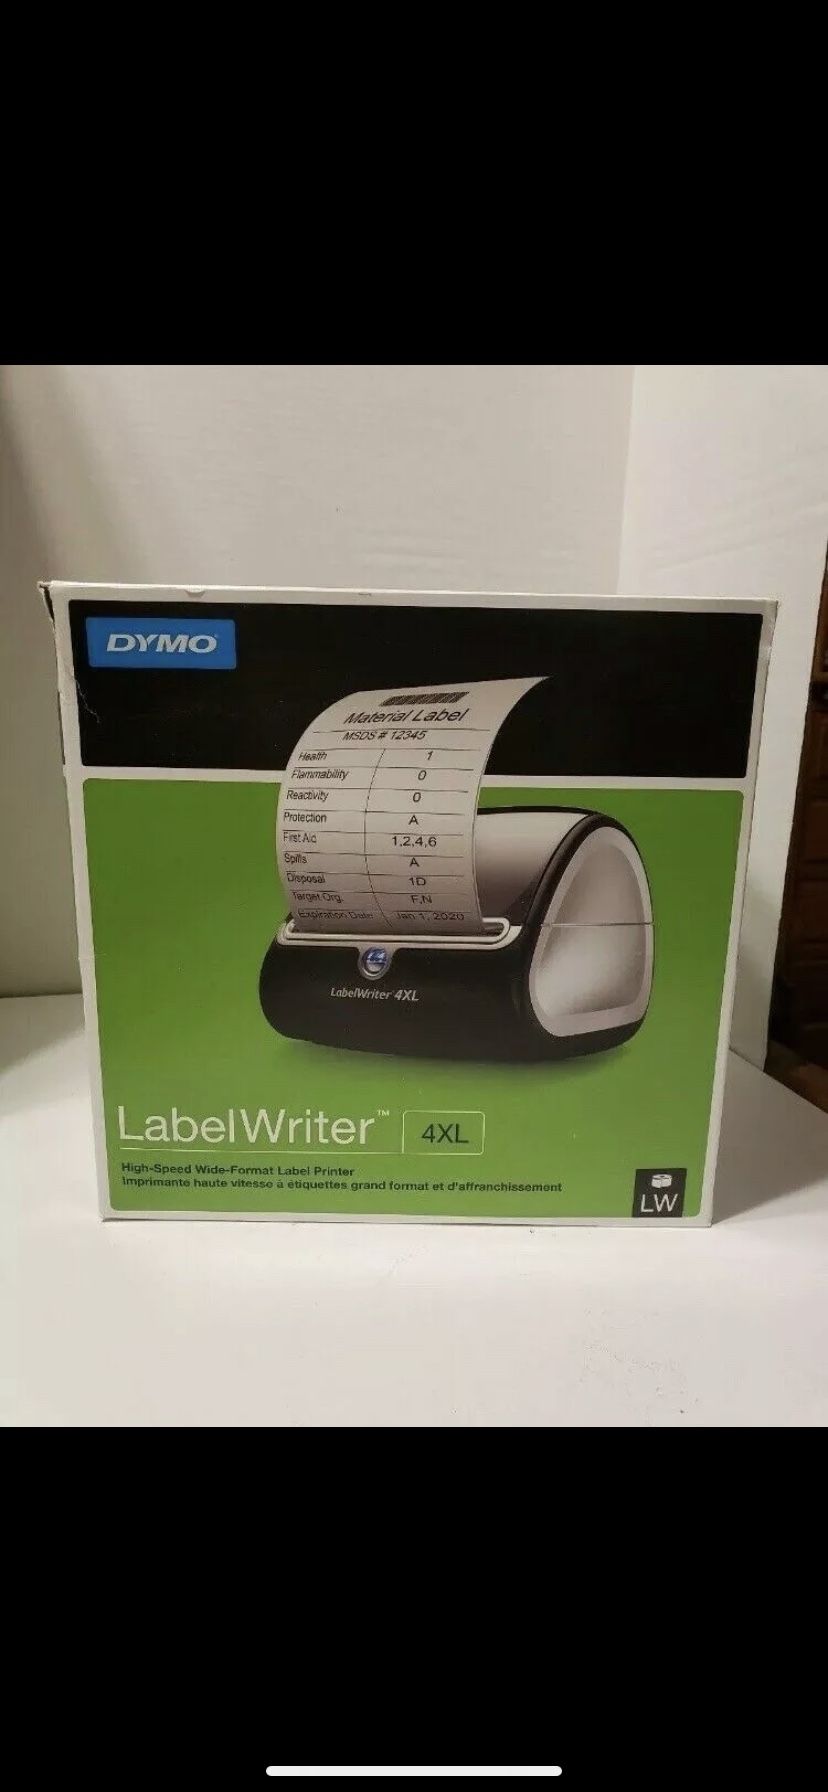 Dymo LabelWriter 4XL Label Thermal Printer - Black (1755120) BRAND NEW IN BOX!!